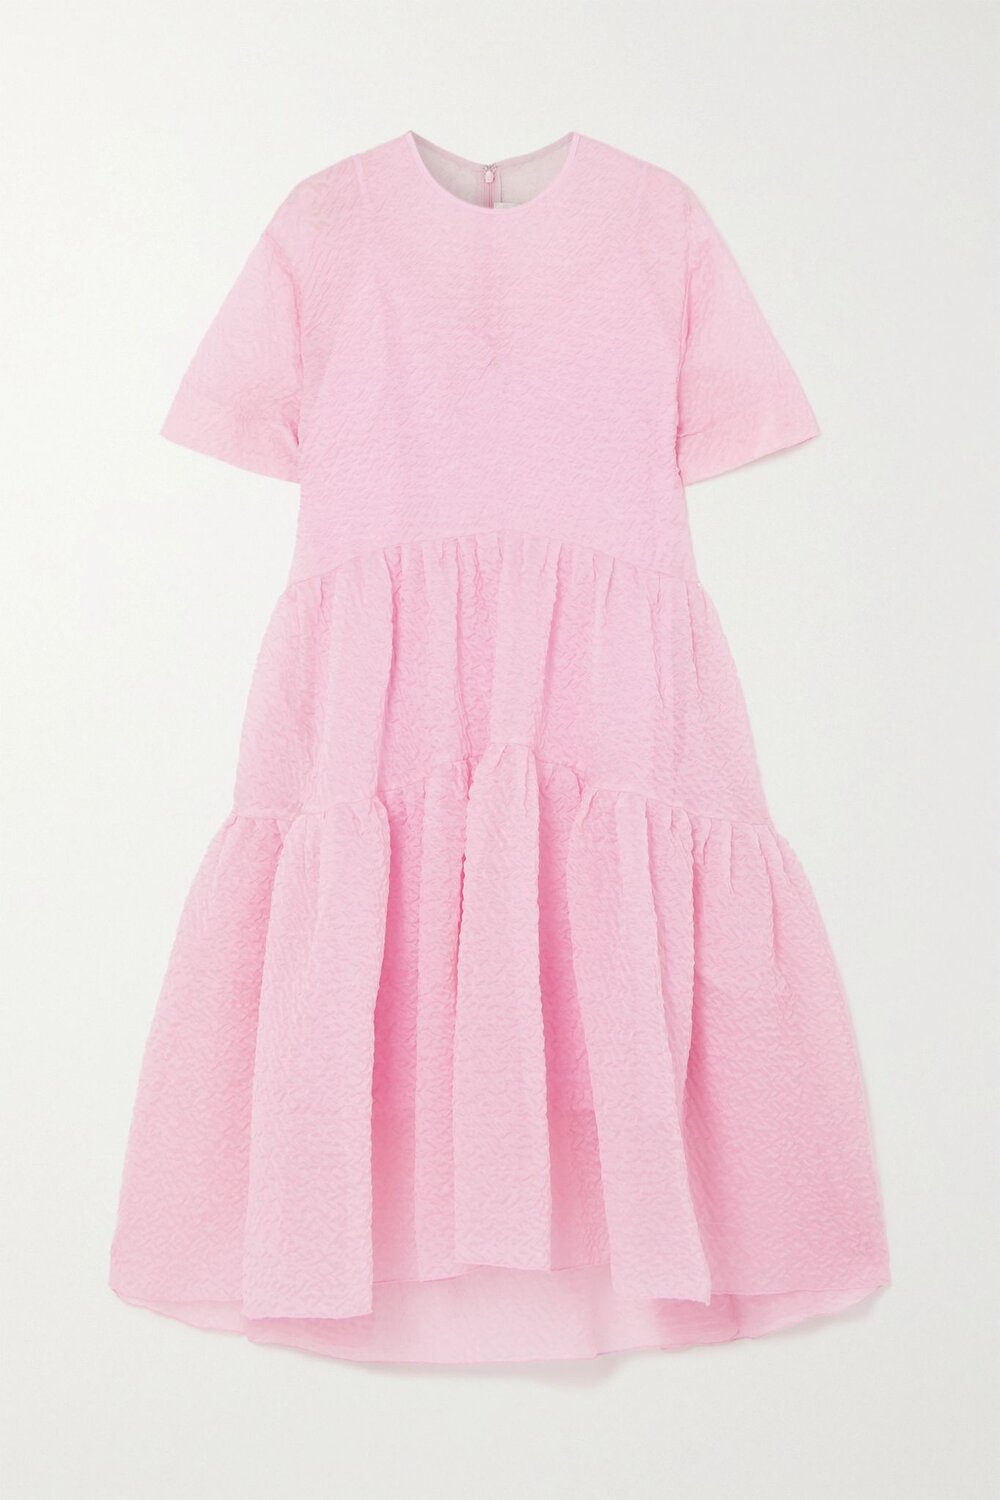 VB Pink Puff dress.jpg